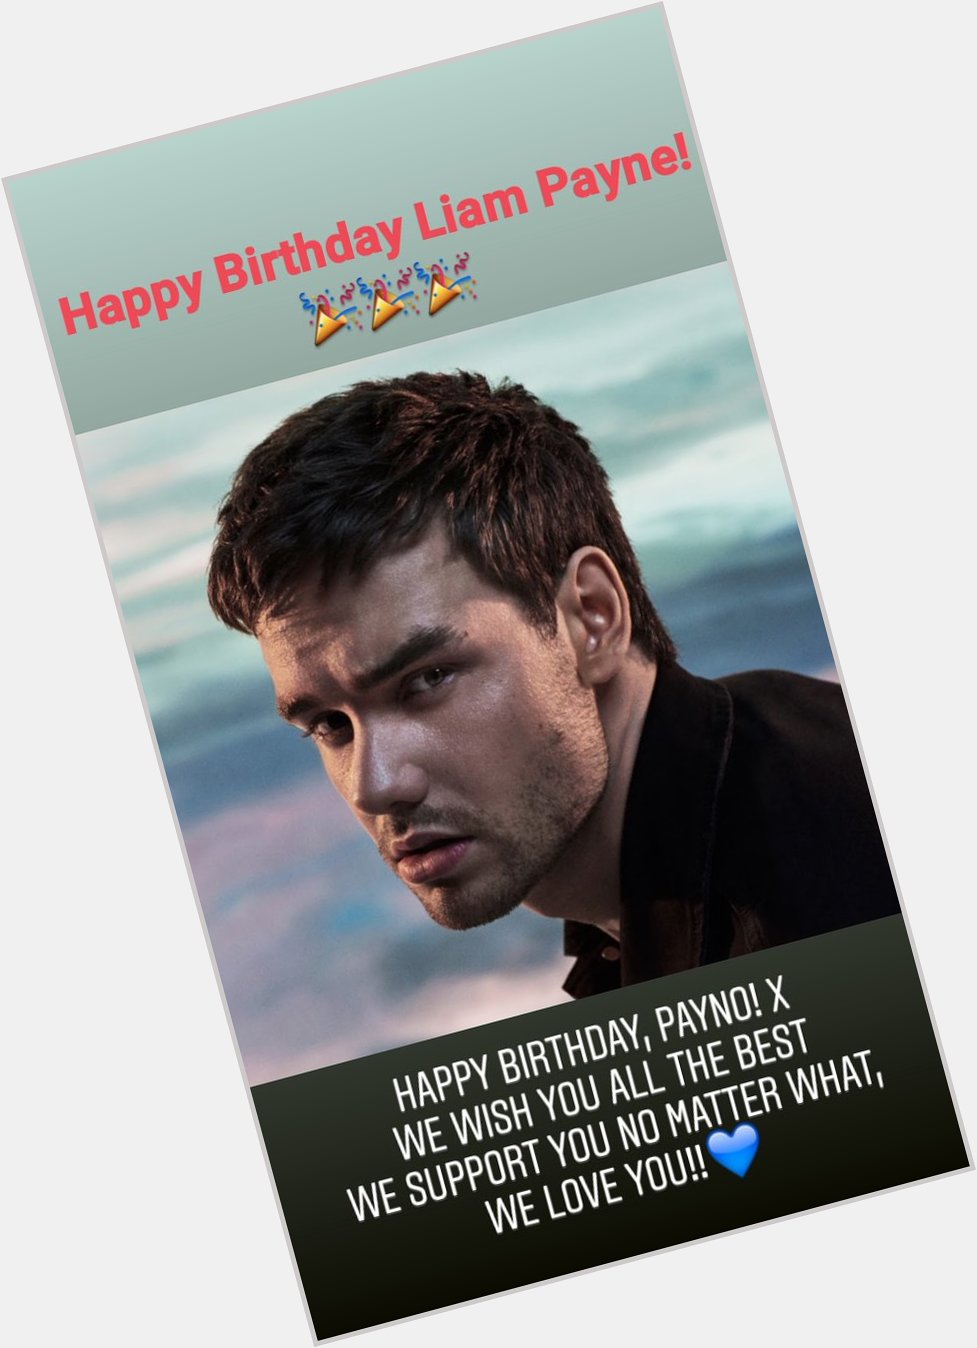 Happy Birthday Liam Payne! 